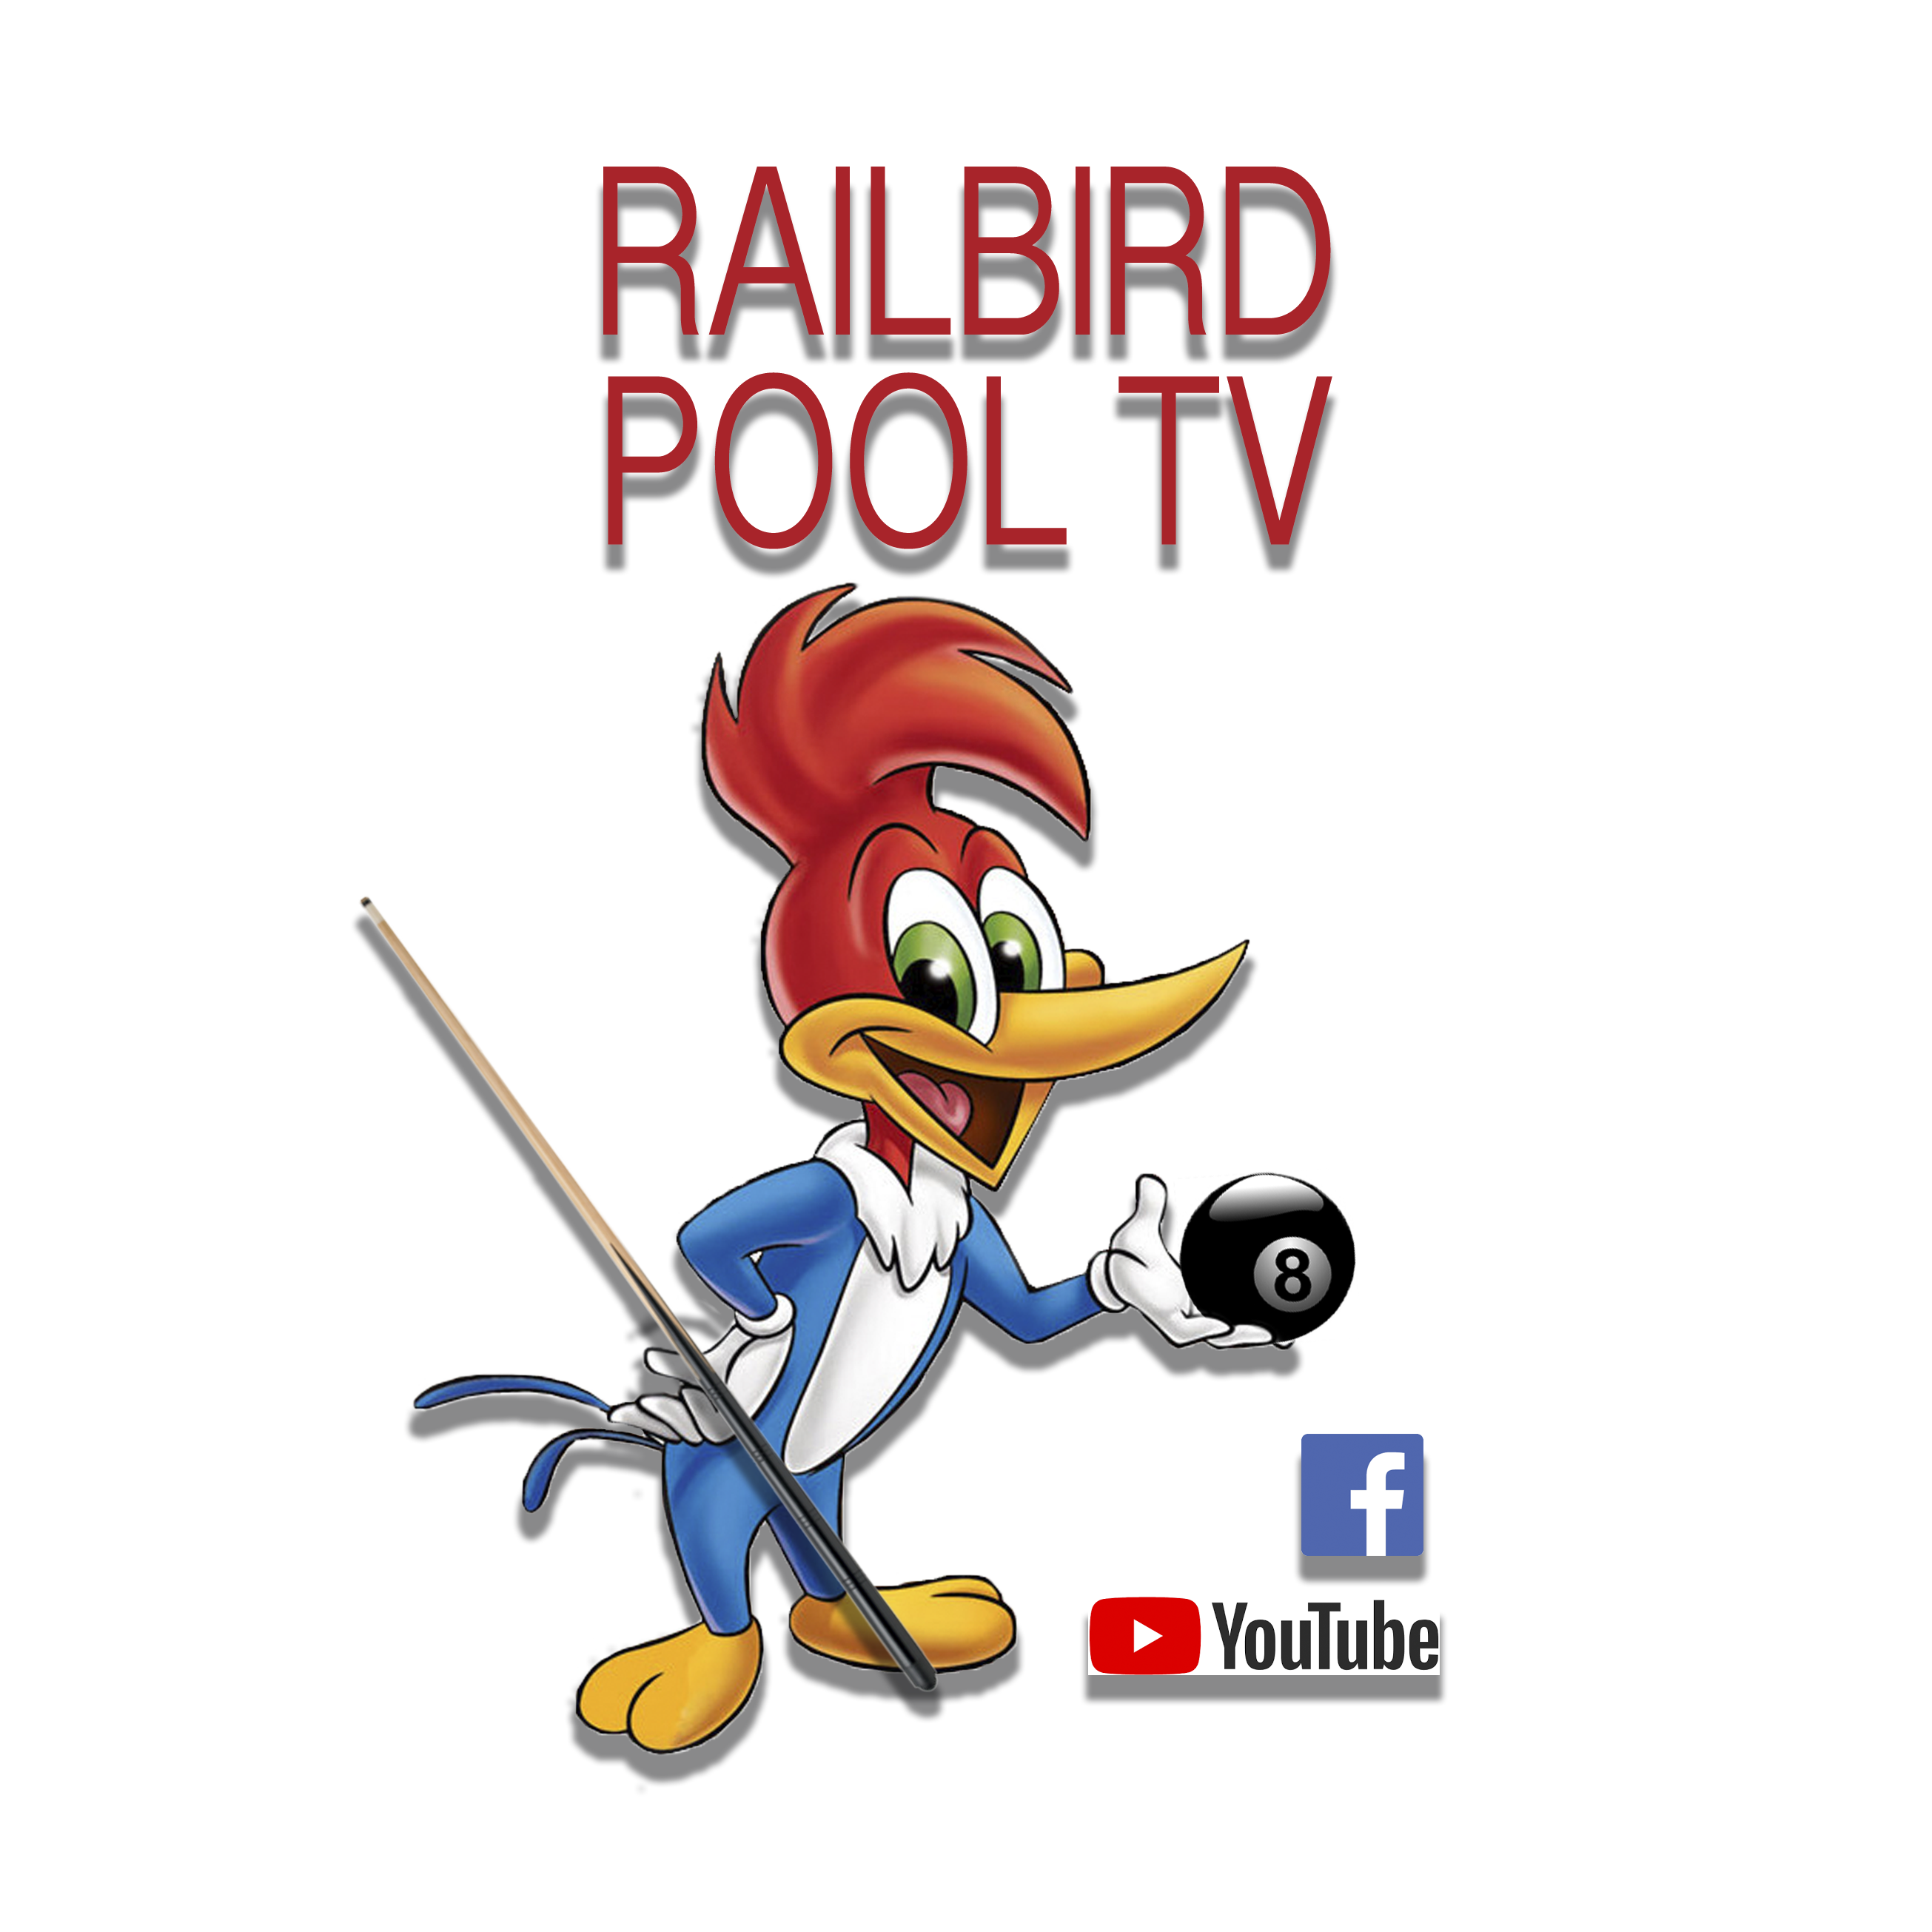 RailBird Pool TV